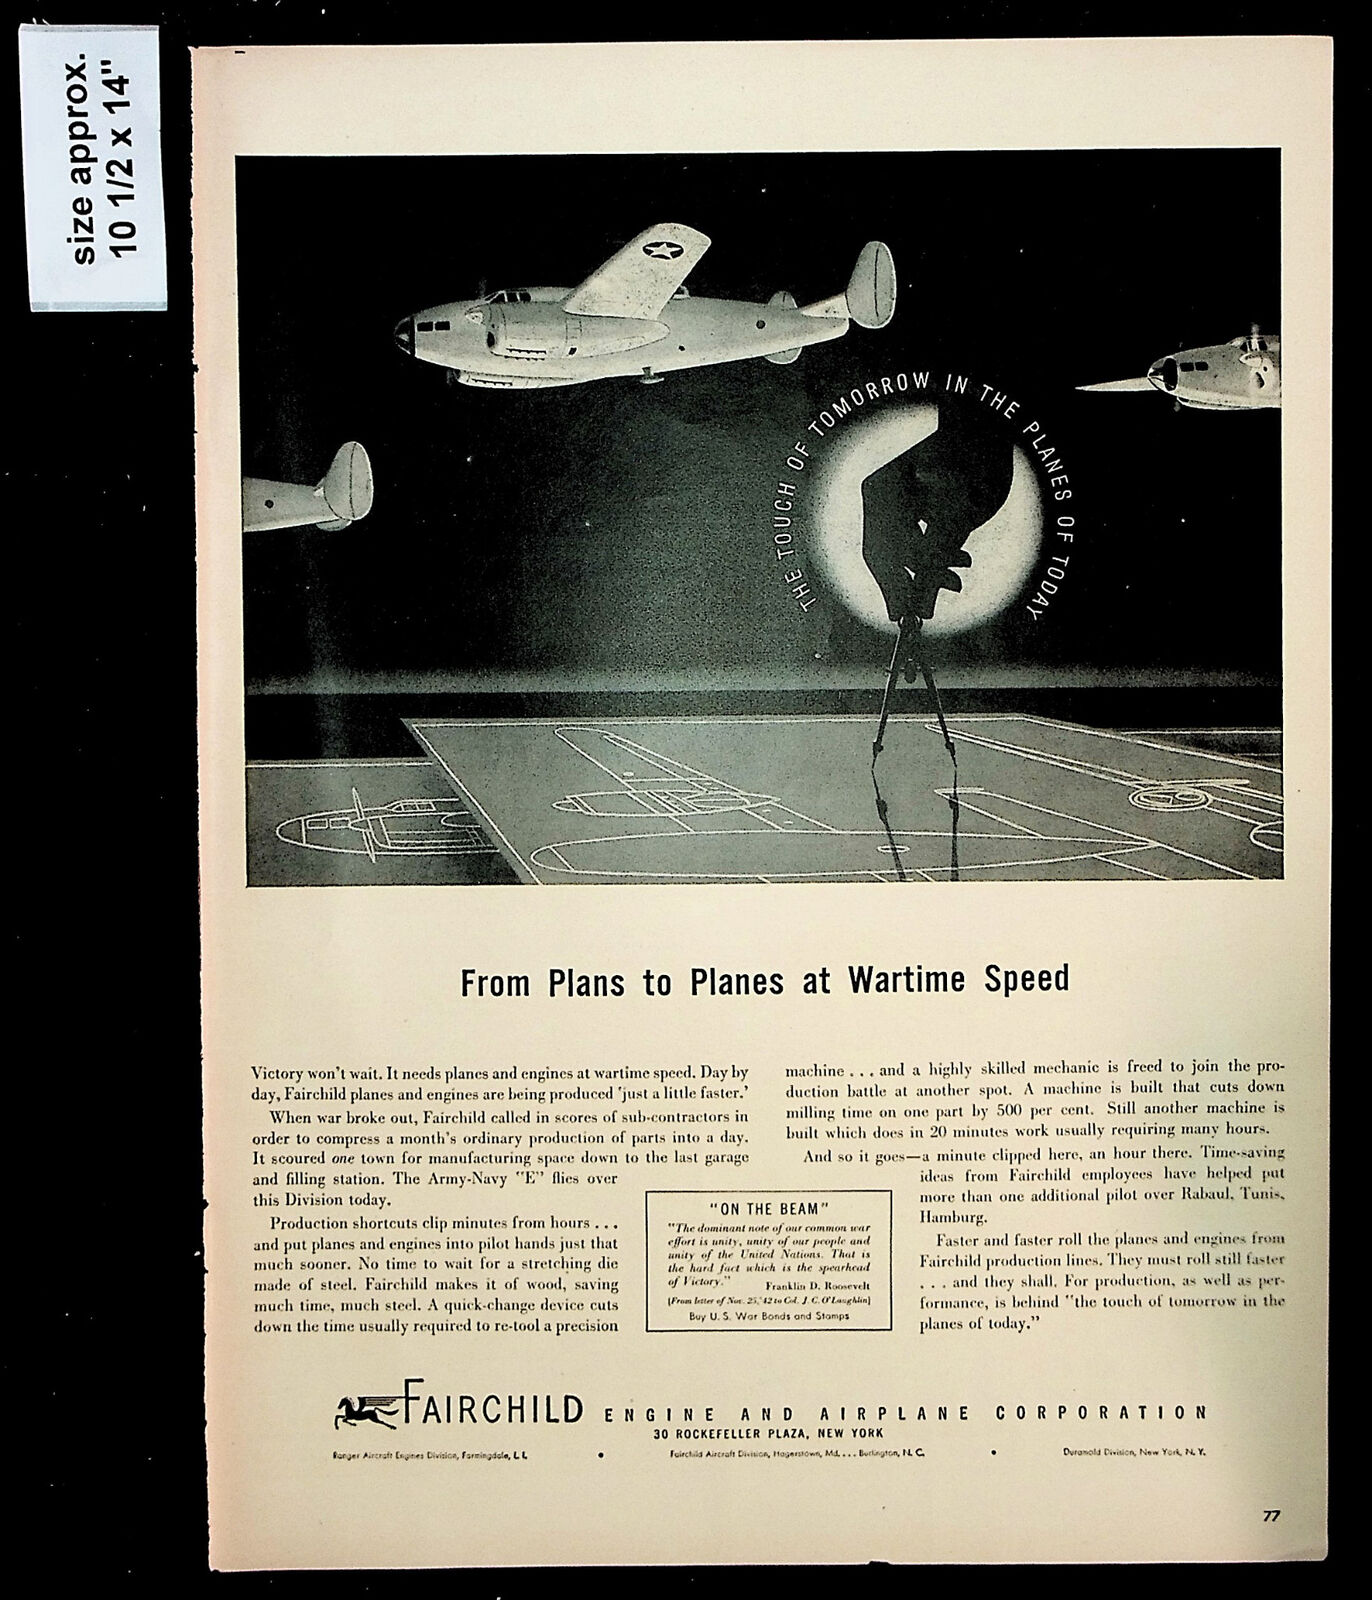 1943 Fairchild Engine Airplane Corp Planes War Military Vintage Print Ad 37698